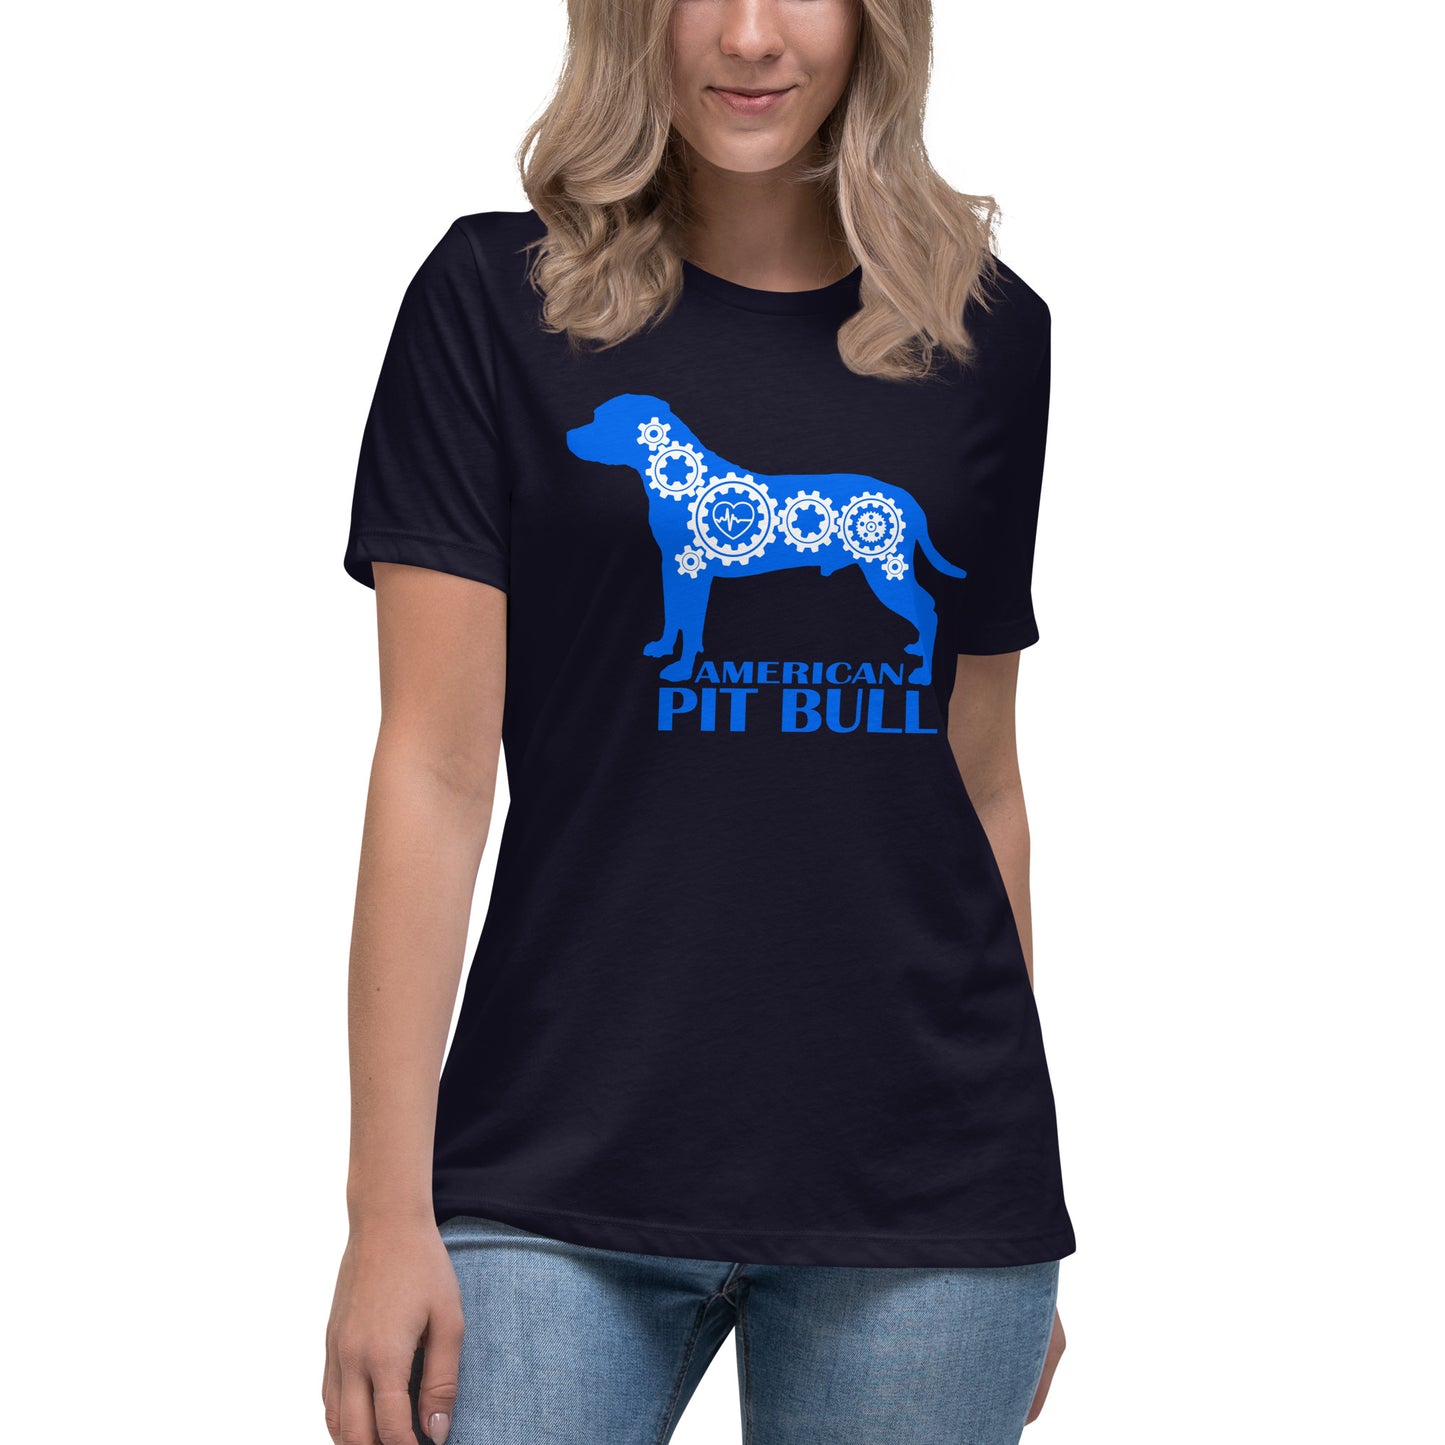 American Pit Bull Bionic women’s navy t-shirt by Dog Artistry.